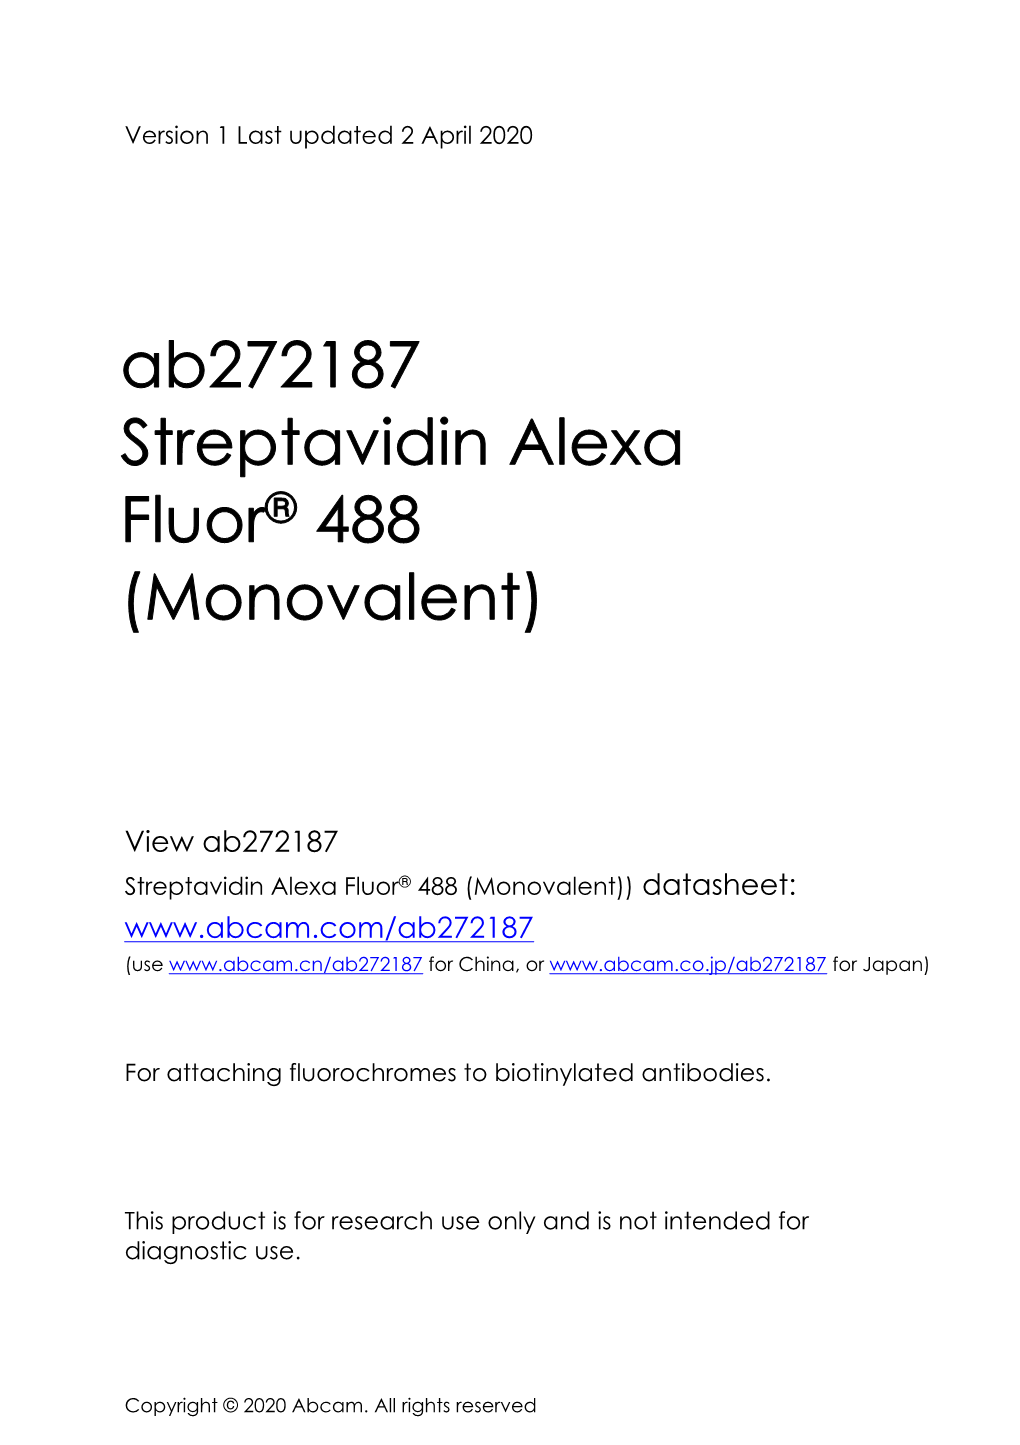 Ab272187 Streptavidin Alexa Fluor® 488 (Monovalent)